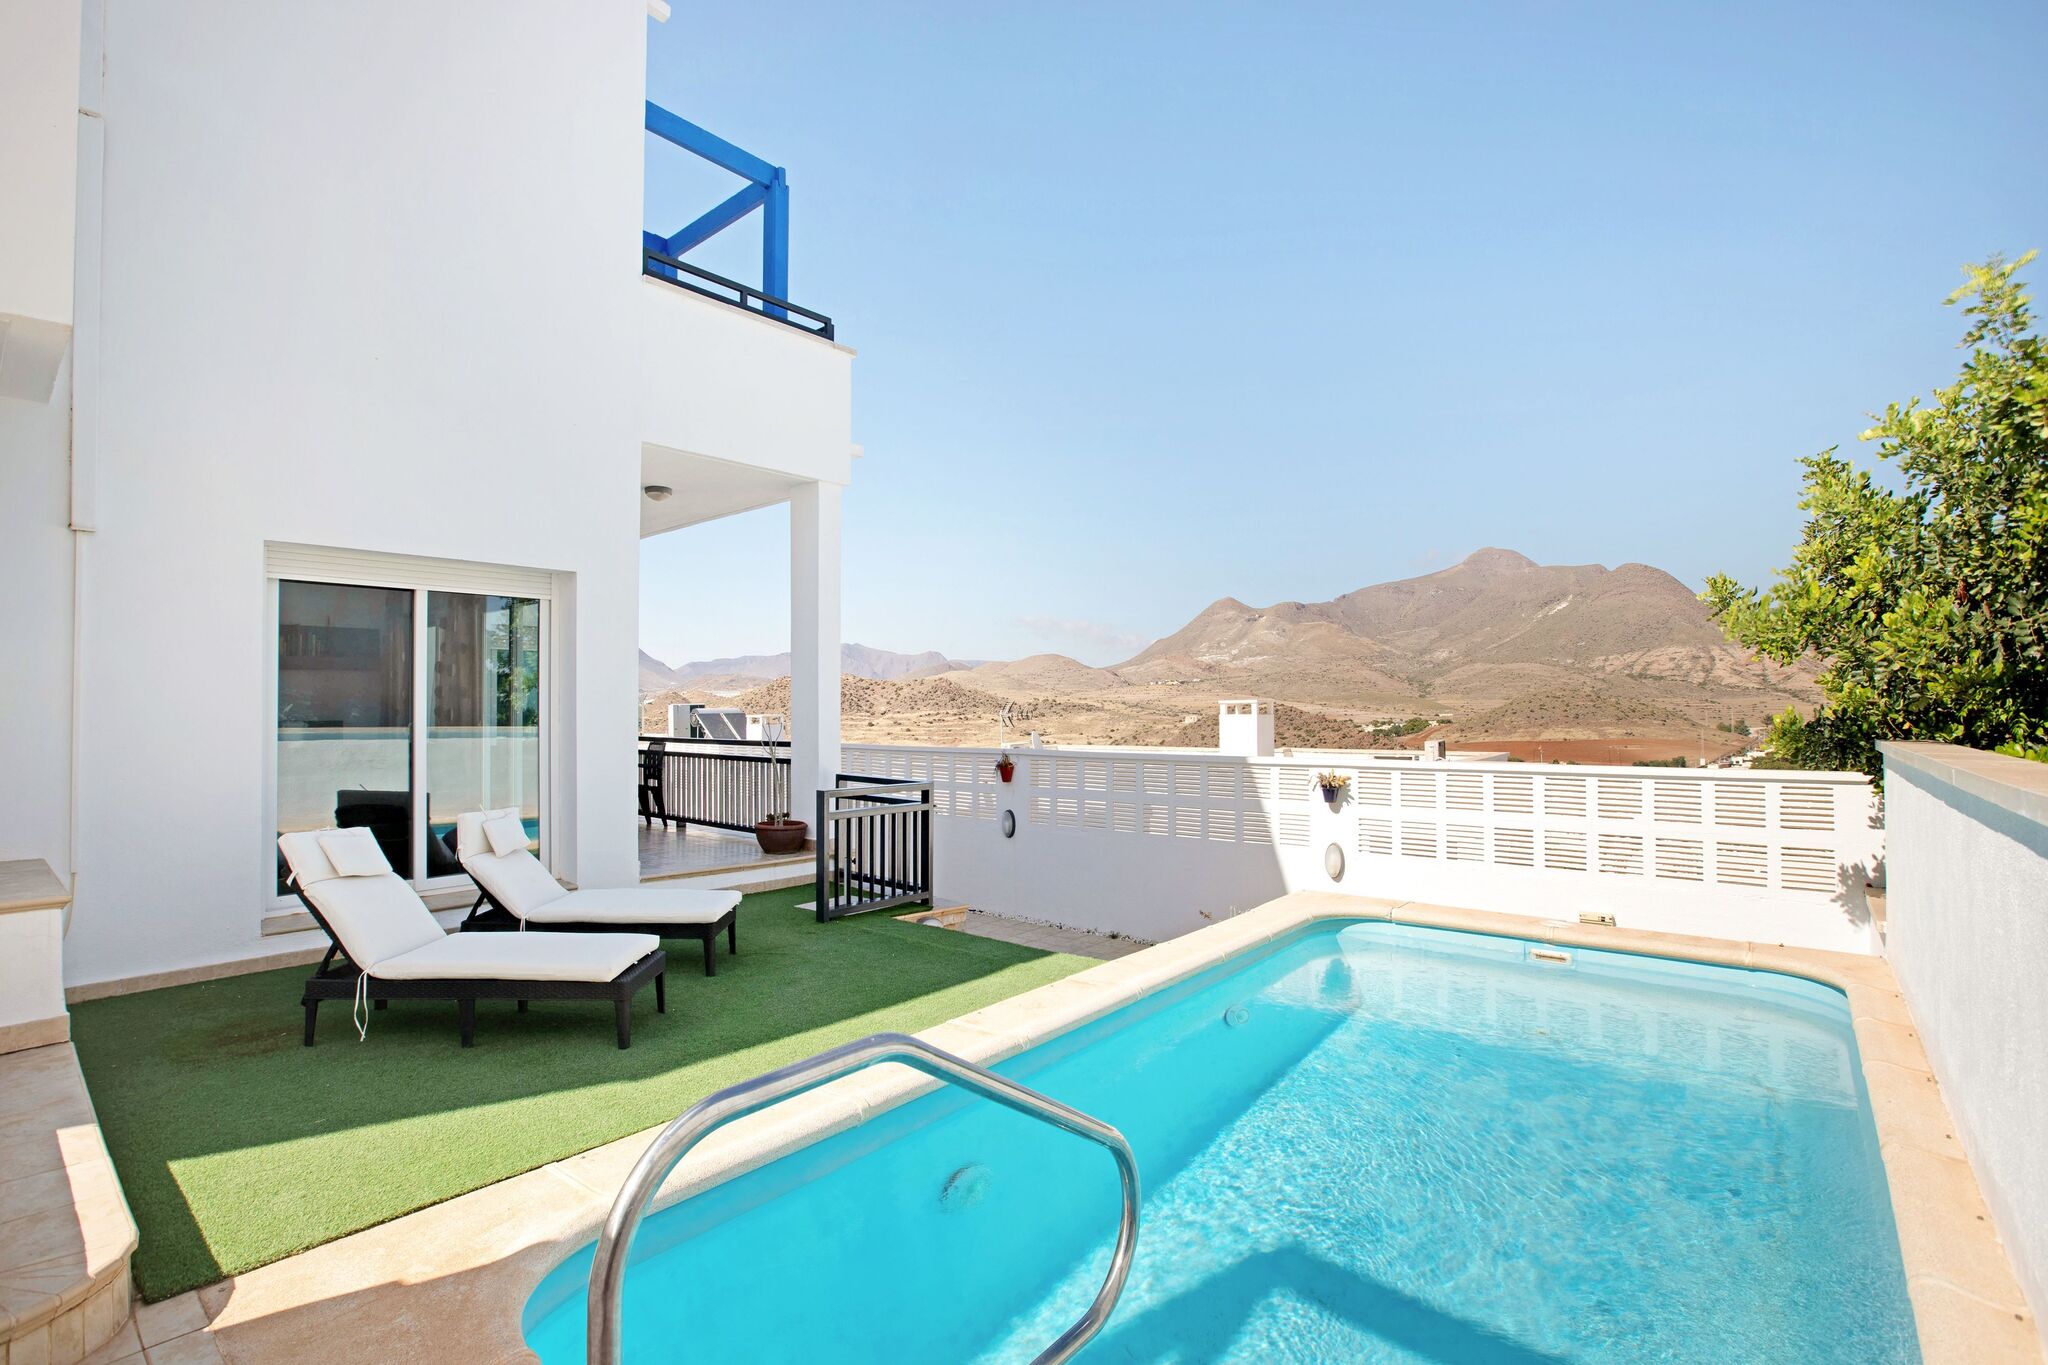 Maison de vacances lumineuse à Nijar avec piscine privée